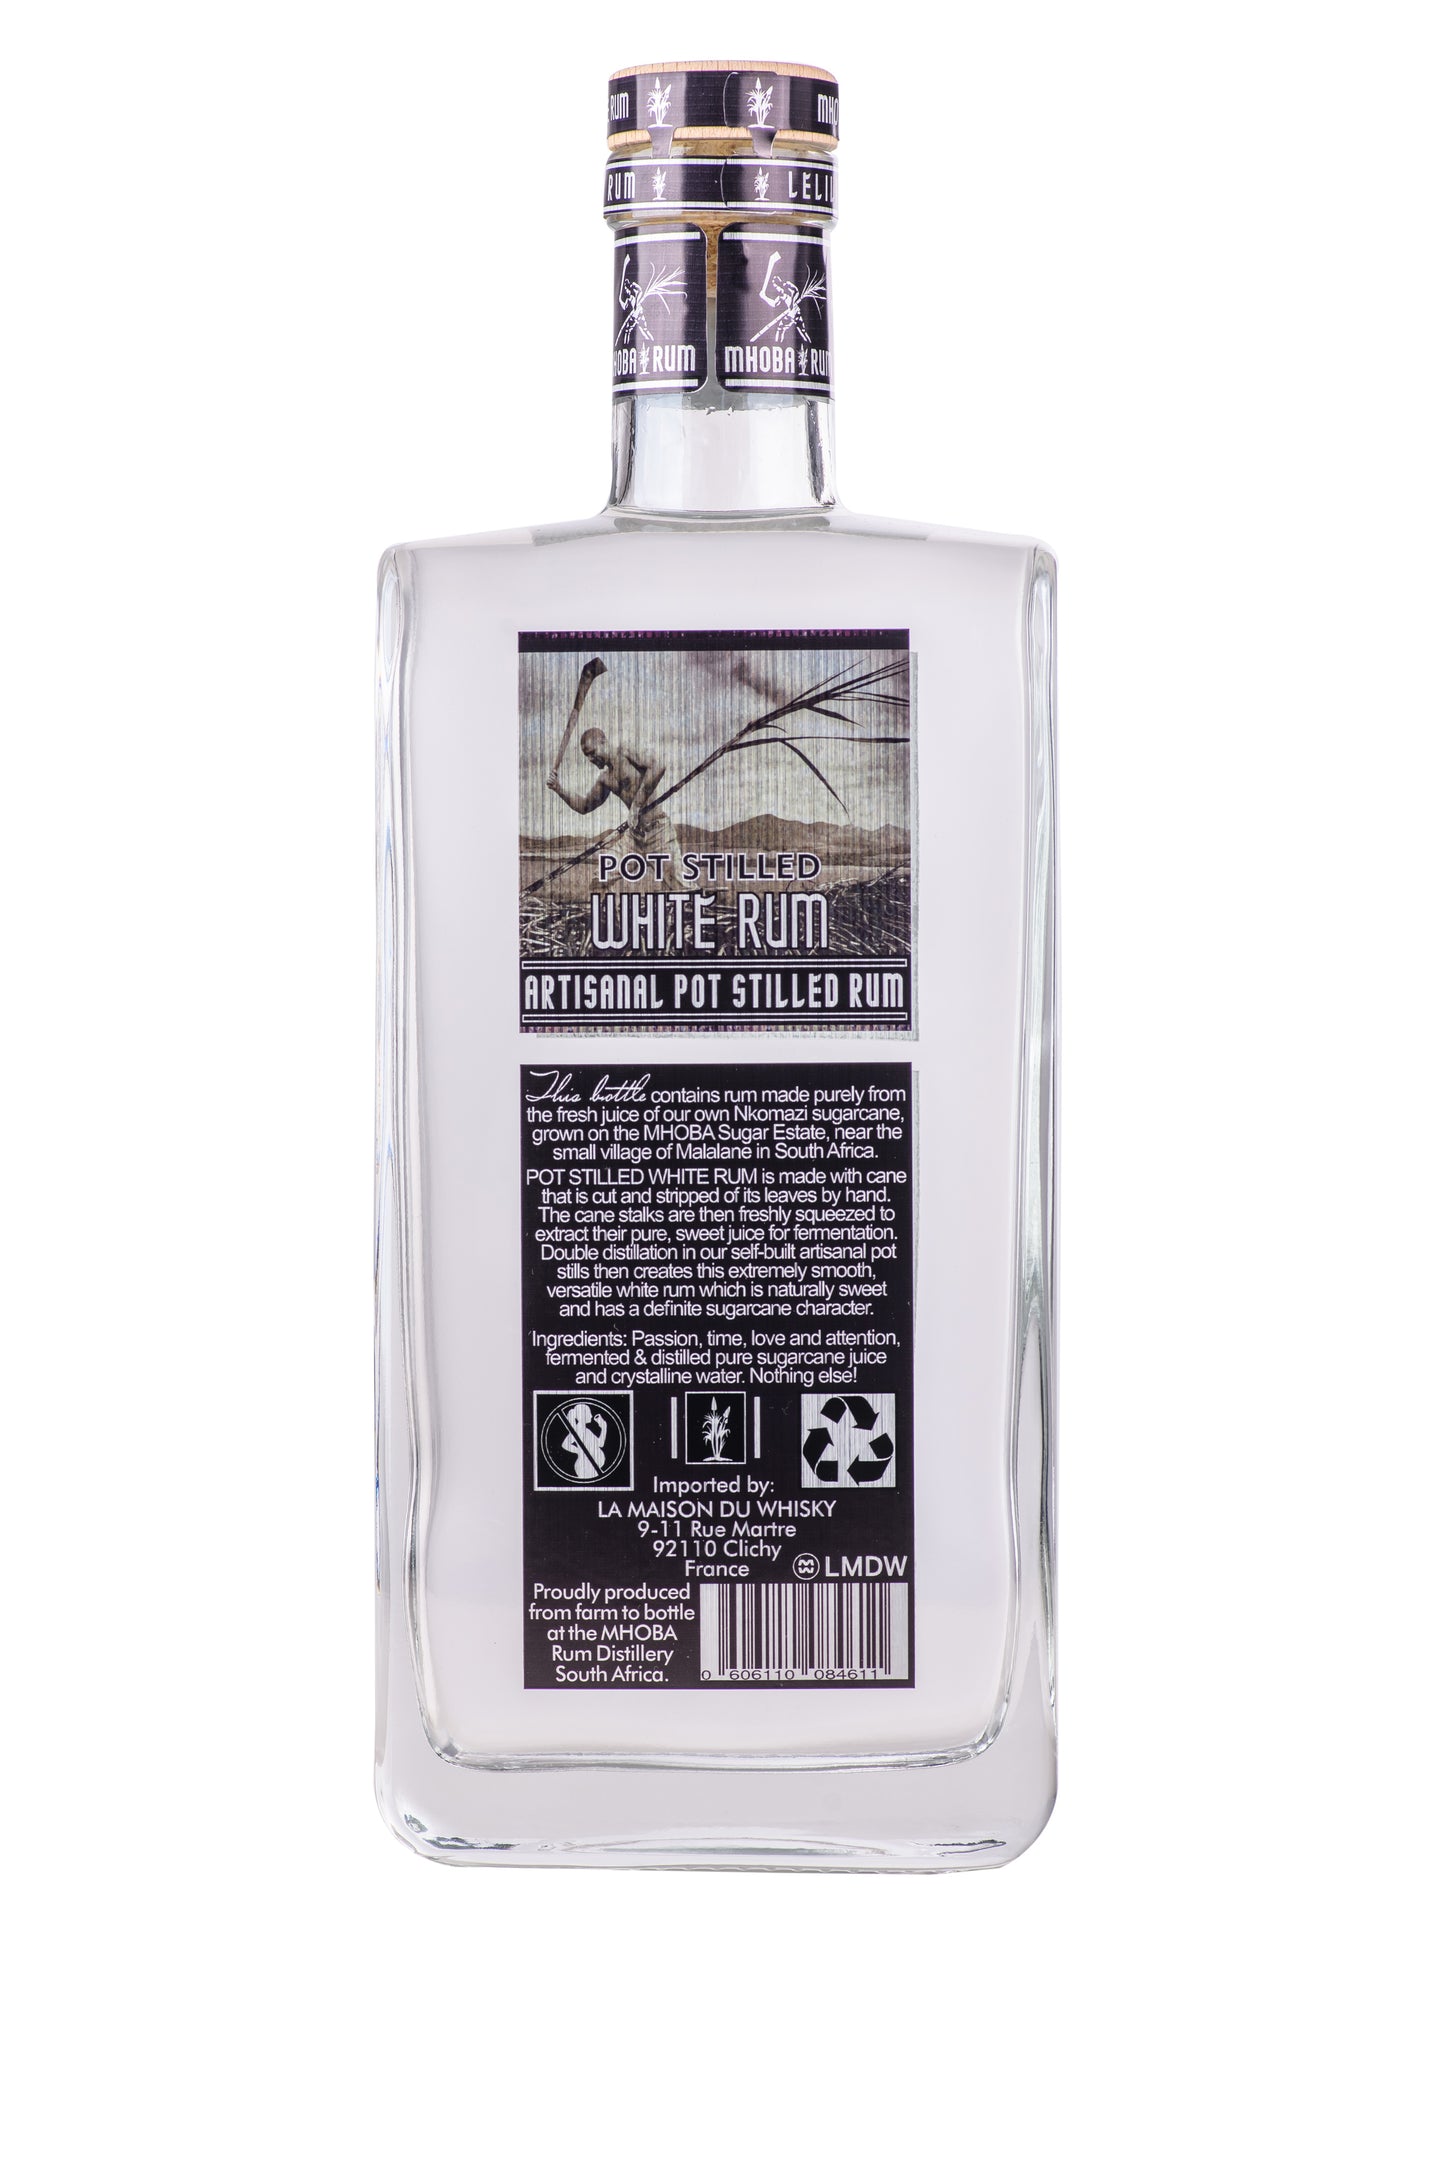 MHOBA Pot Stilled White Rum 750ml 43% ABV